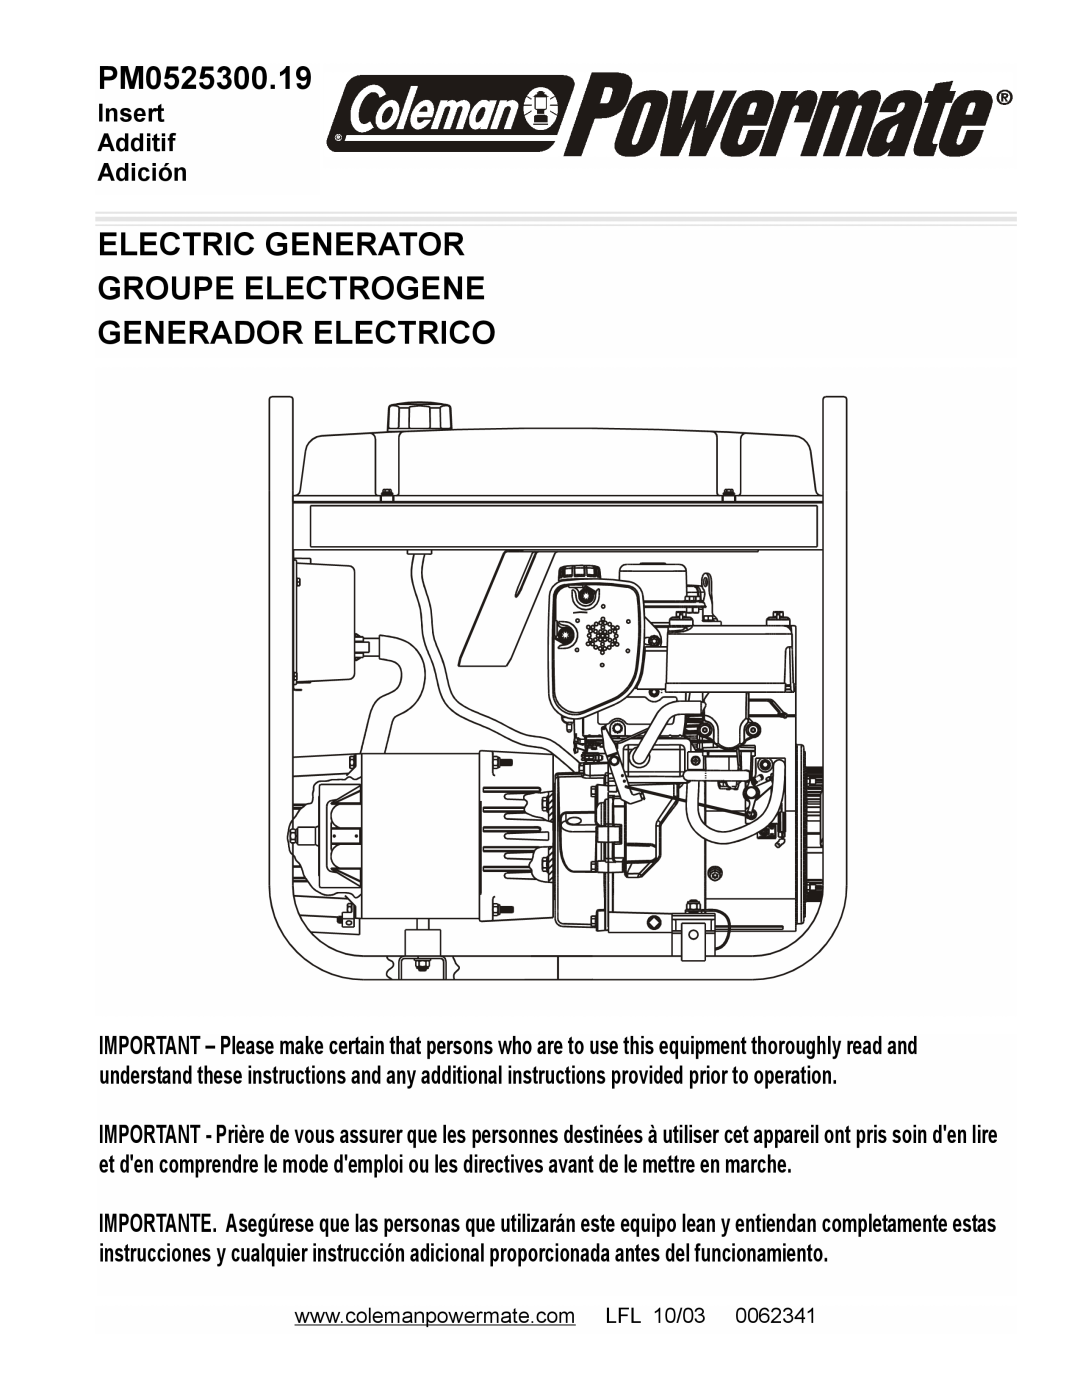 Powermate PM0525300.19 manual Electric Generator Groupe Electrogene, Generador Electrico, Insert Additif Adición 